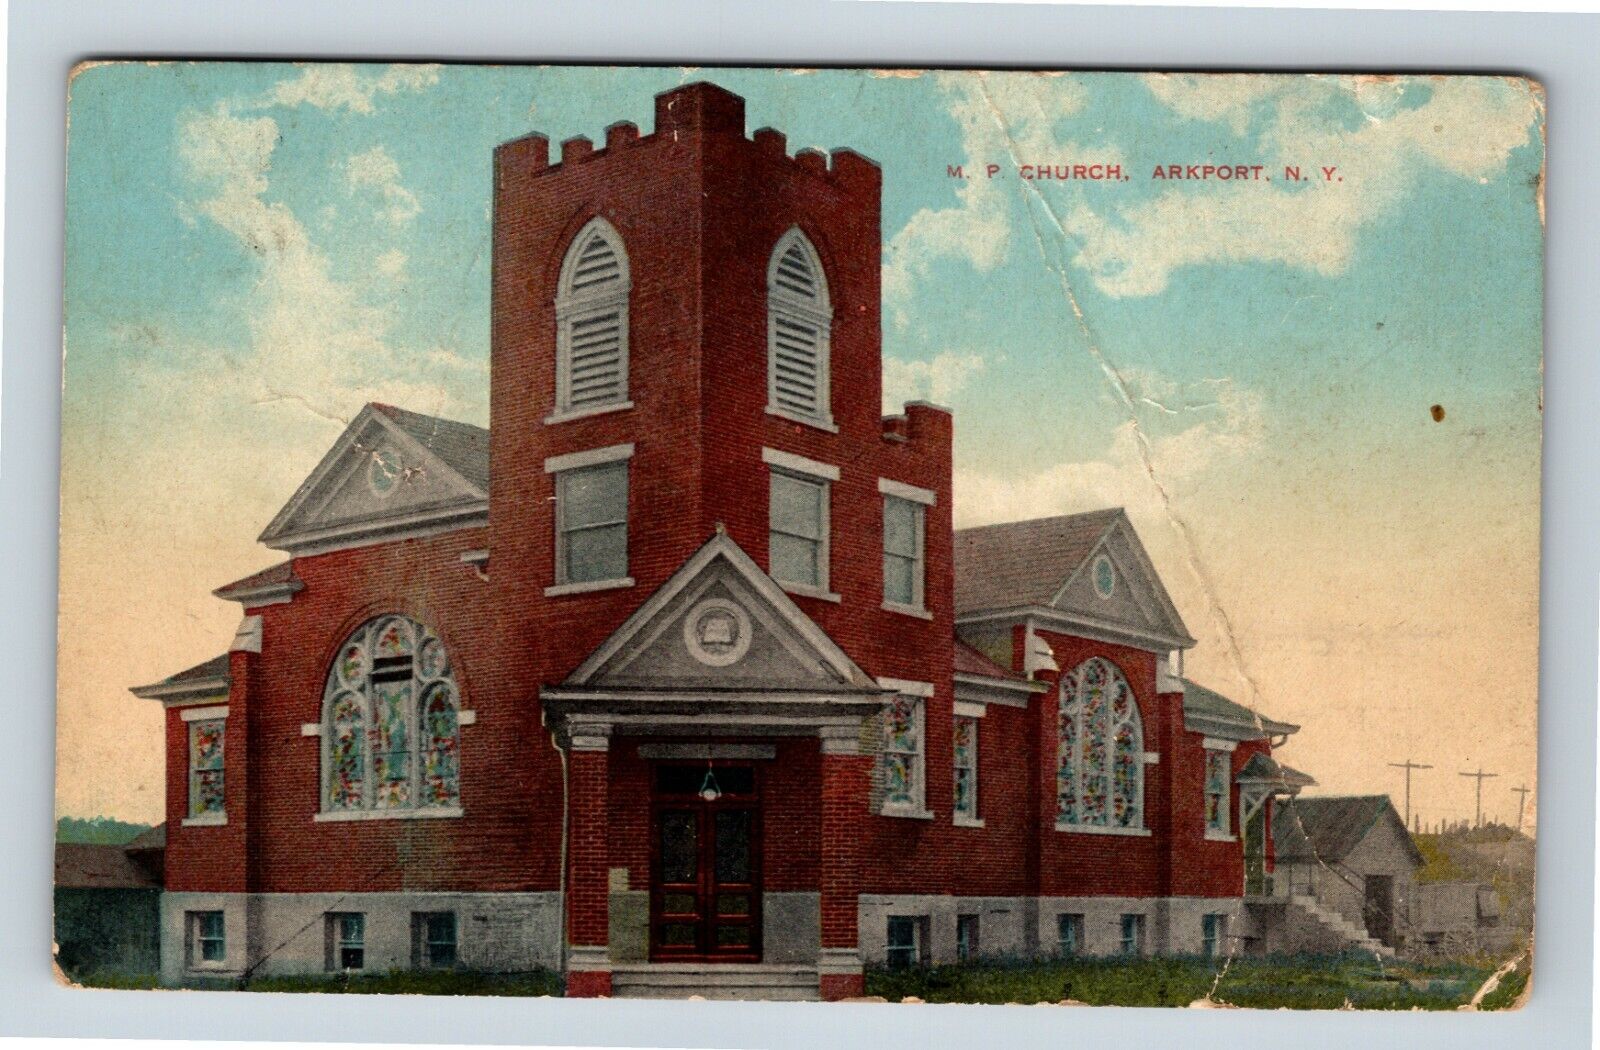 Arkport NY, M.P. Church, New York, Vintage Postcard